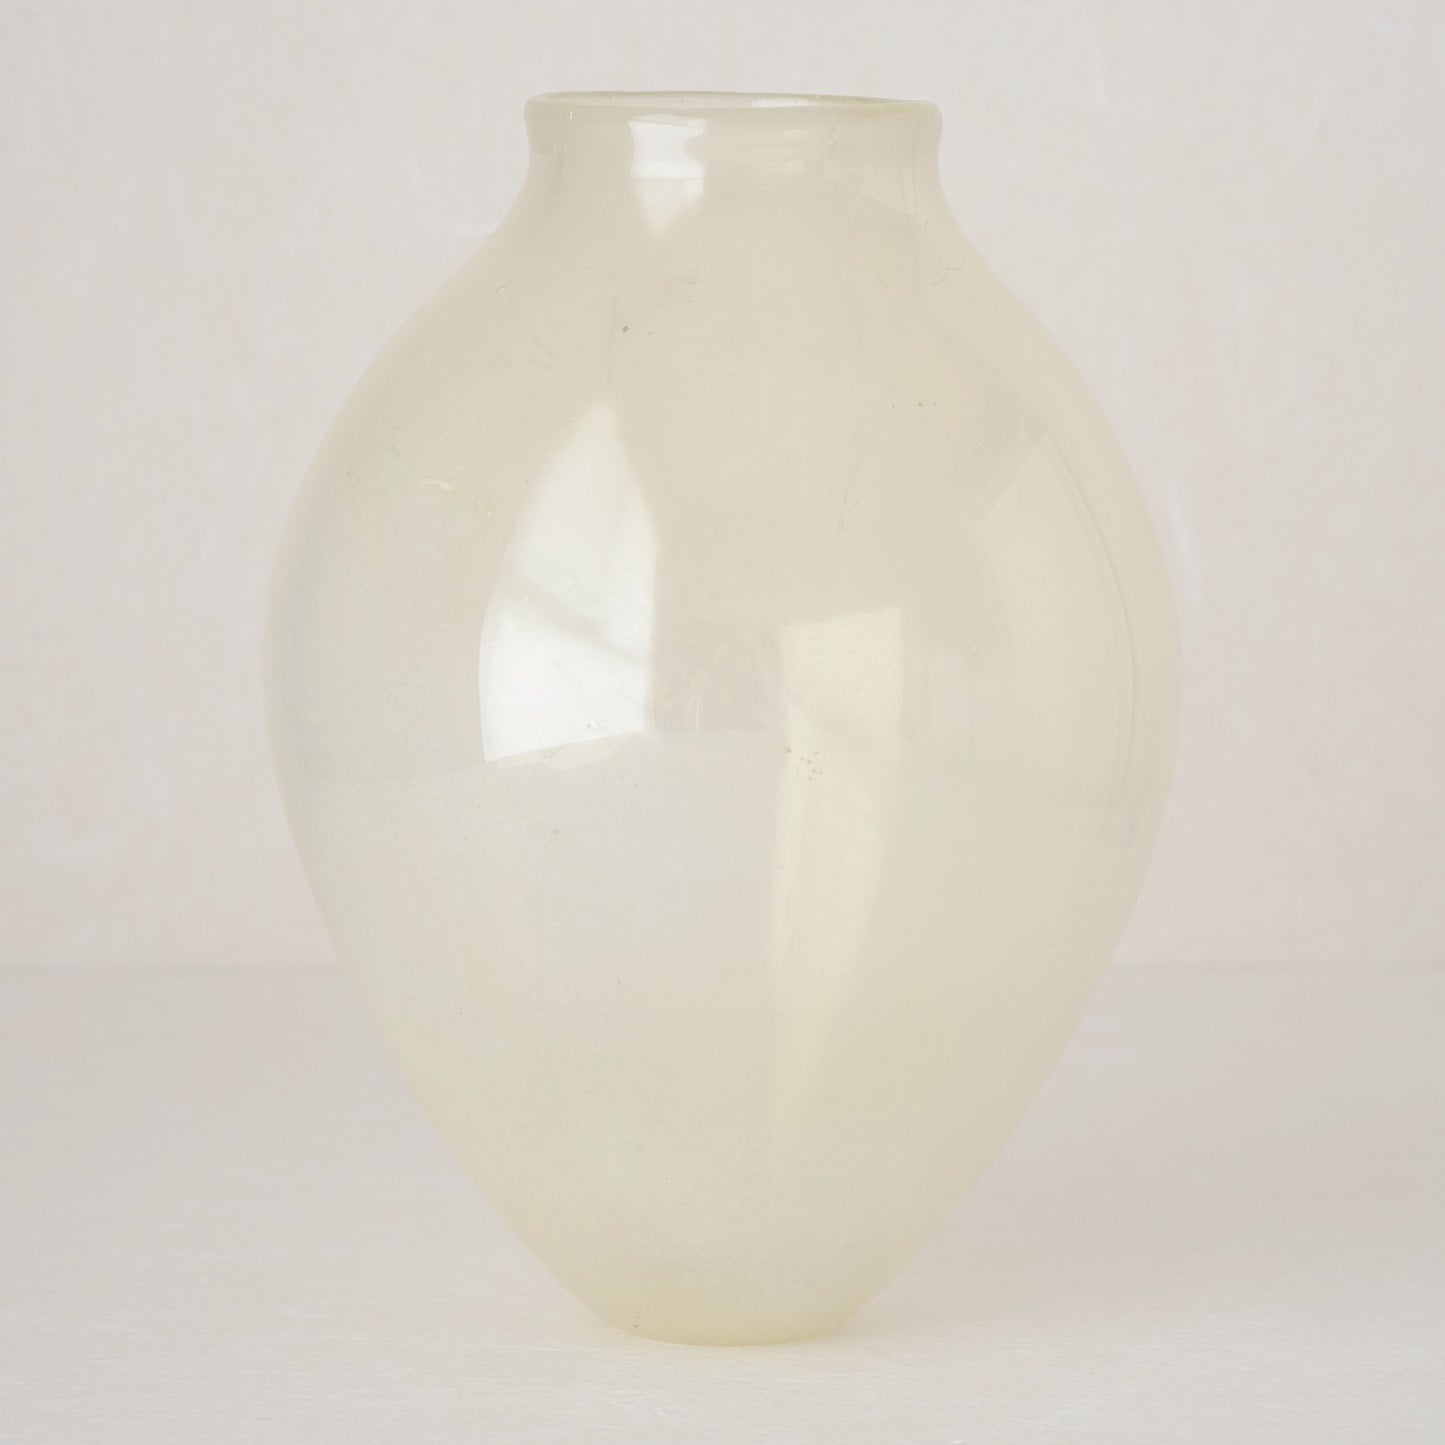 Large Hanji Glass Vase - Yellow